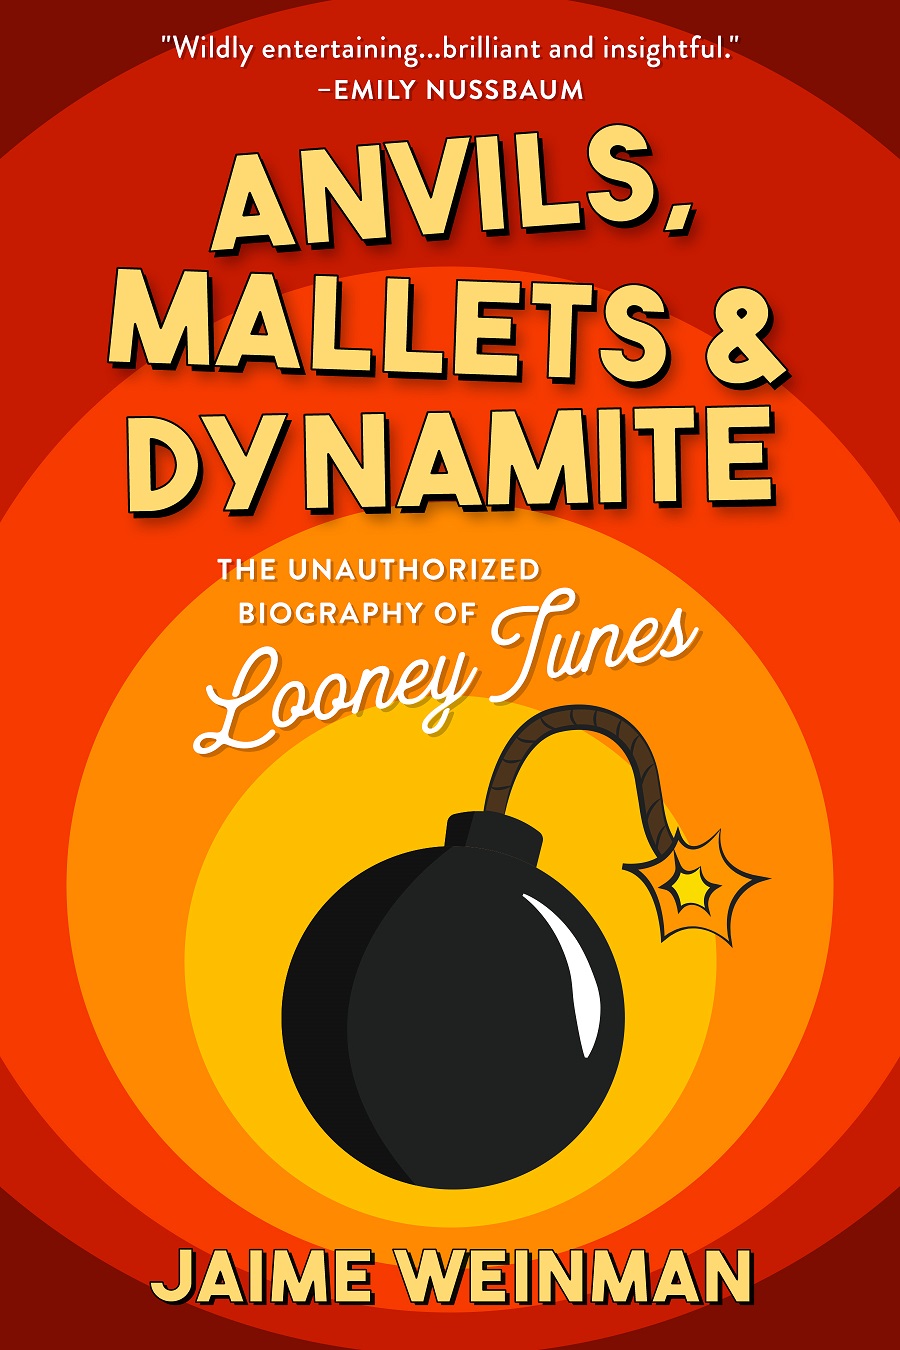 Anvils, Mallets & Dynamite